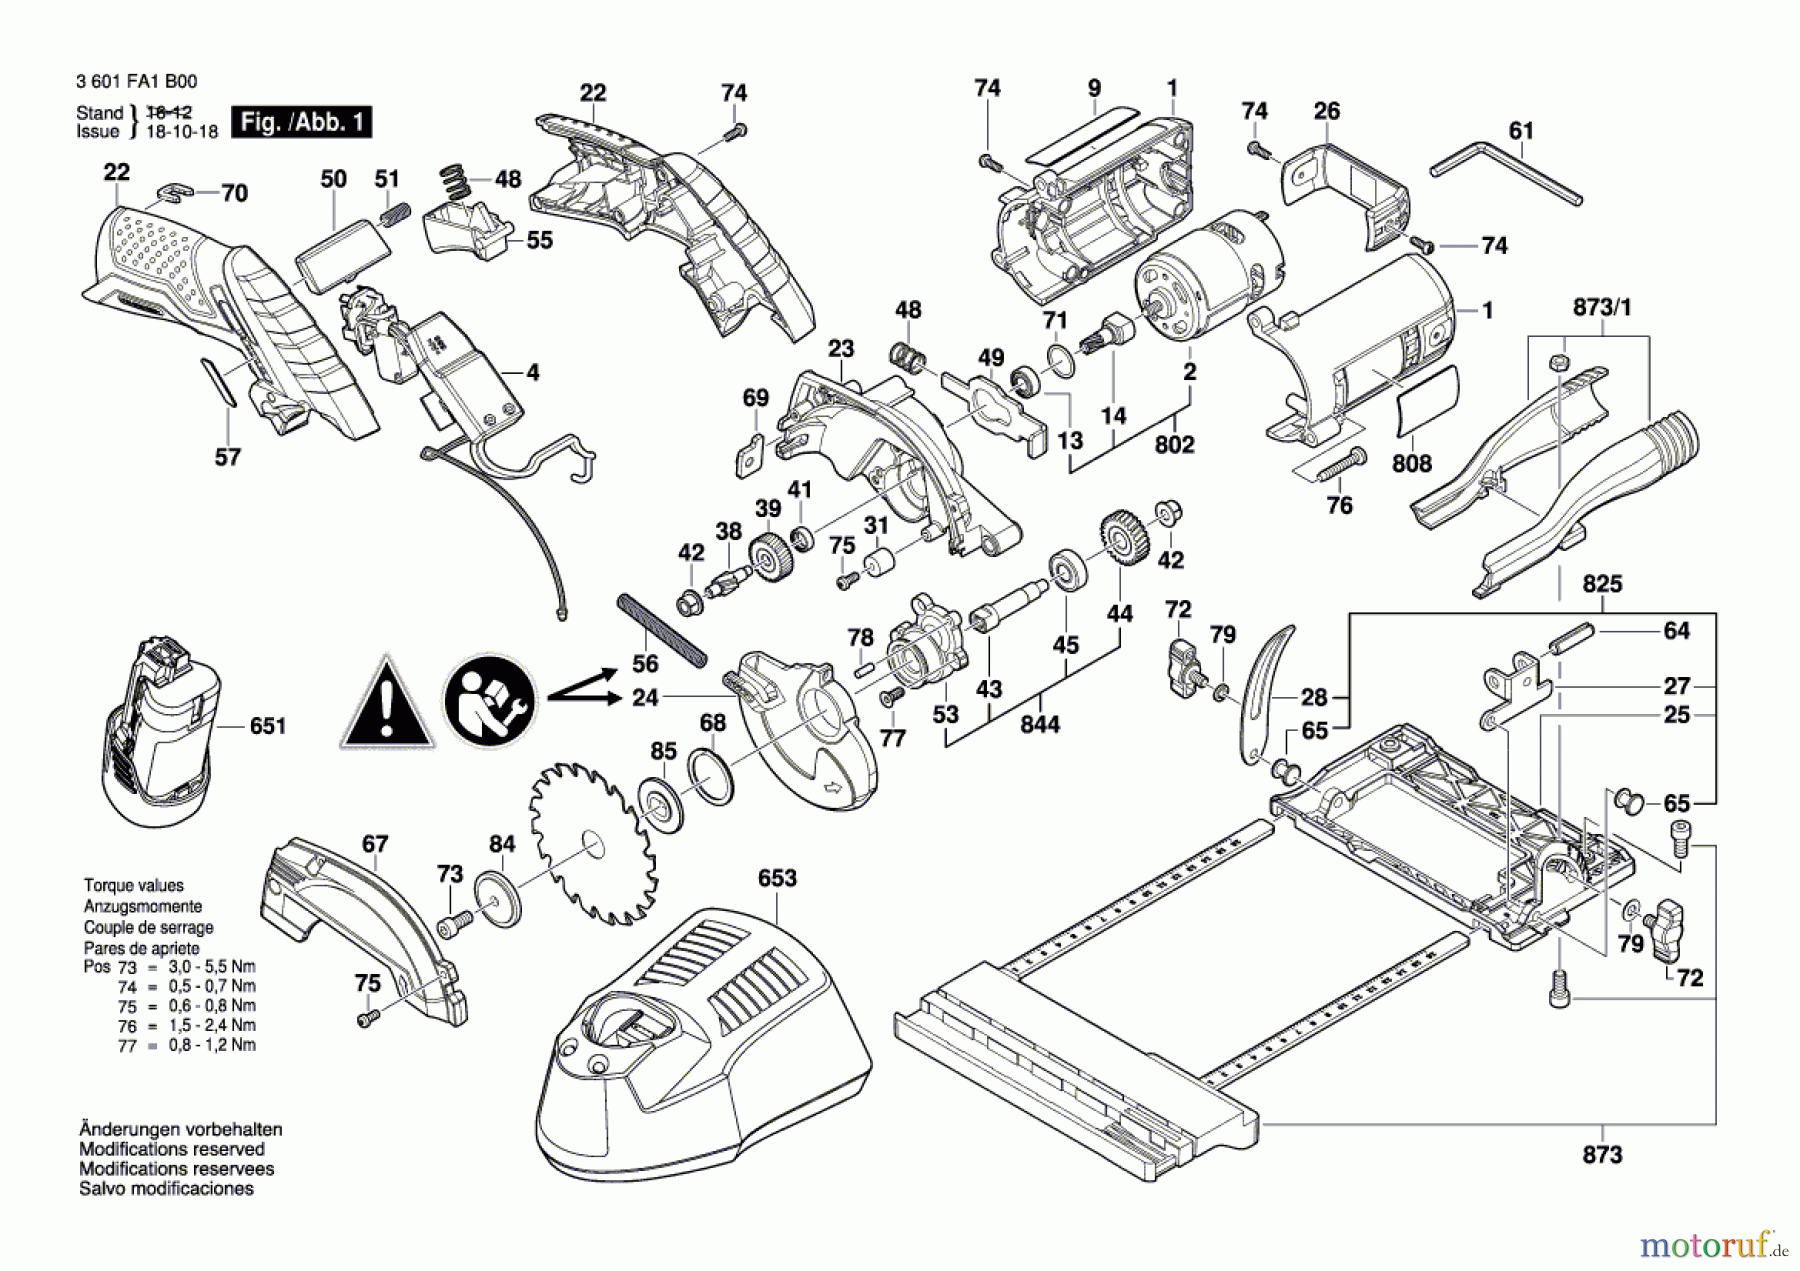  Bosch Akku Werkzeug Akku-Kreissäge BACCS 10,8 V LI Seite 1